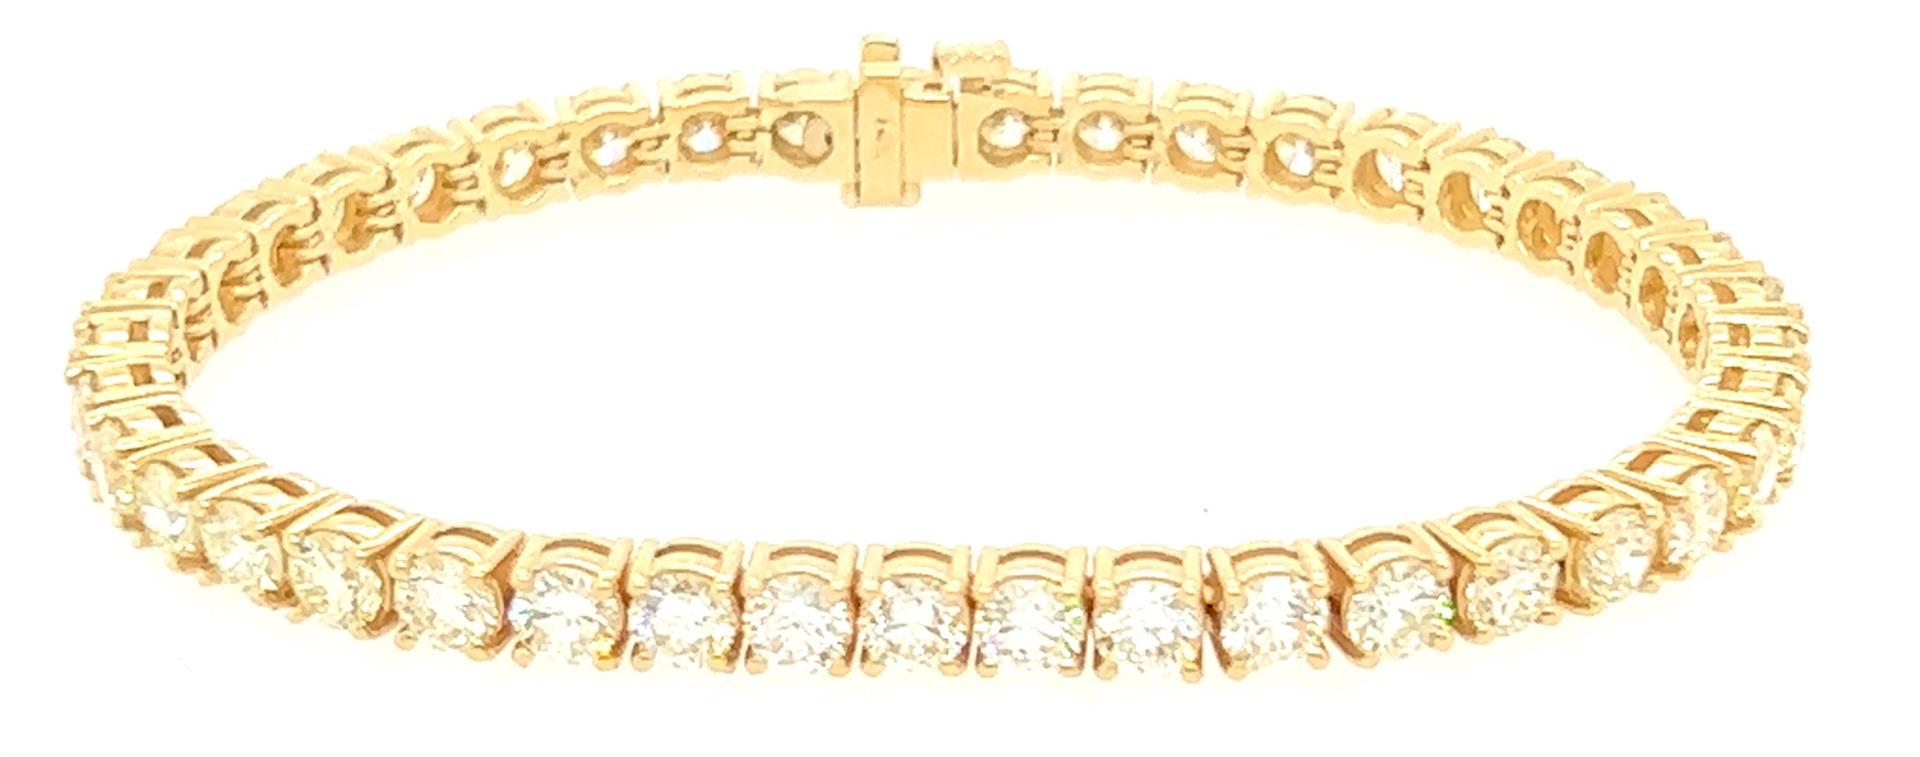 12.47 ctw Diamond Tennis Bracelet - 14KT Yellow Gold